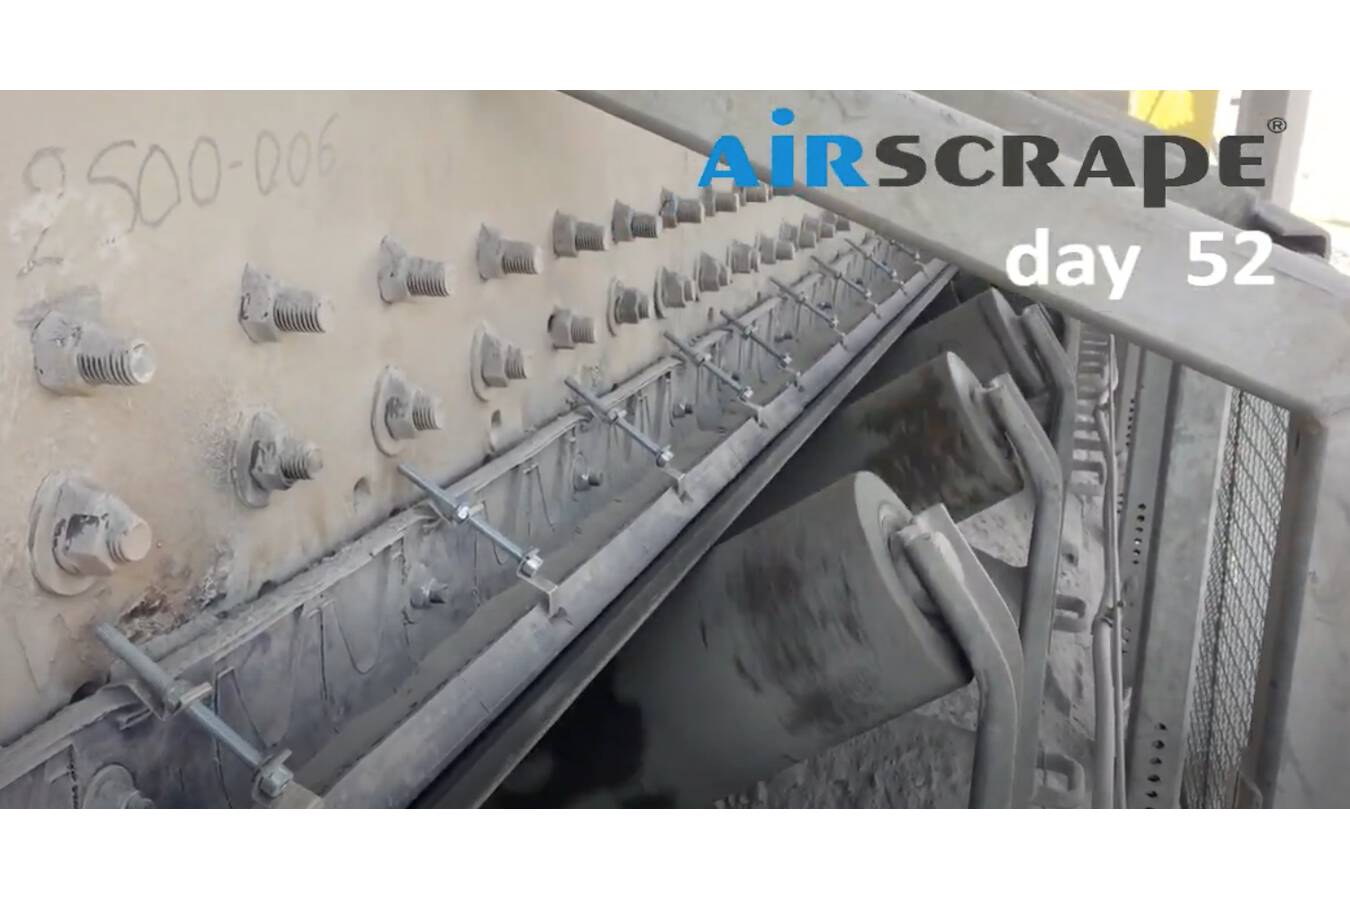 Day 52 AirScrape